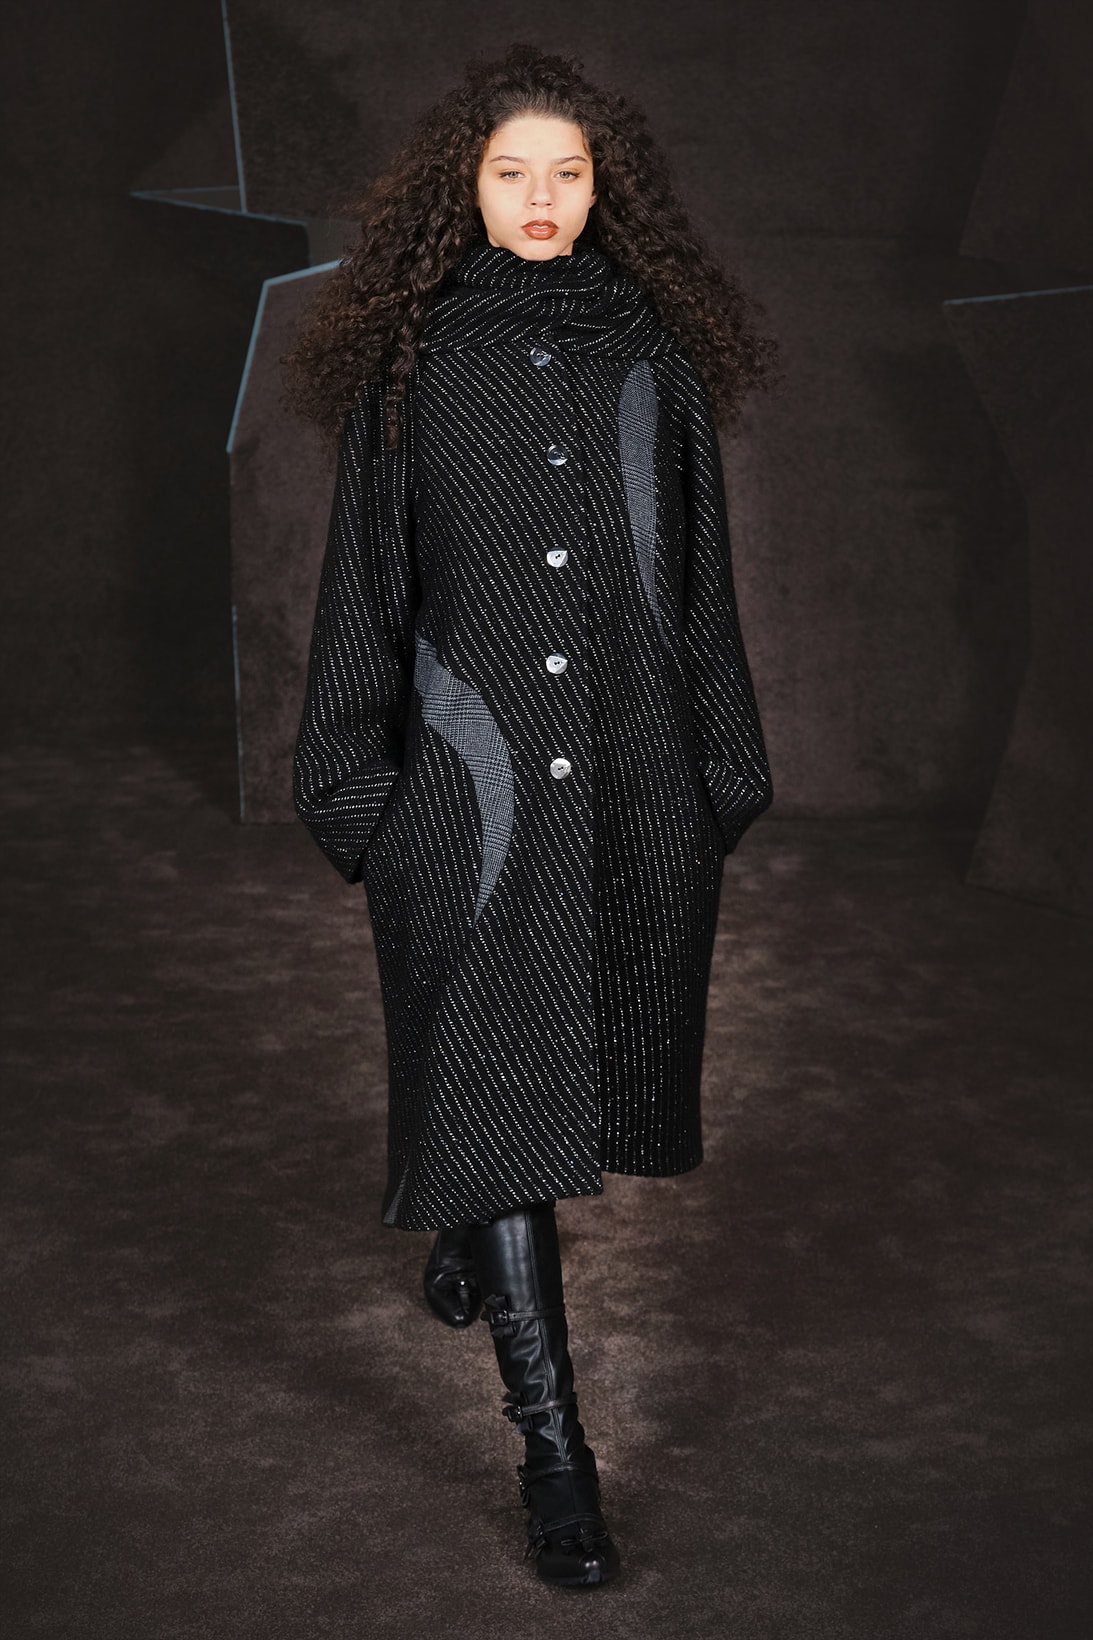 Kiko Kostadinov Fall Winter Collection Paris Fashion Week Runway Show Photos Striped Coat Boots Black